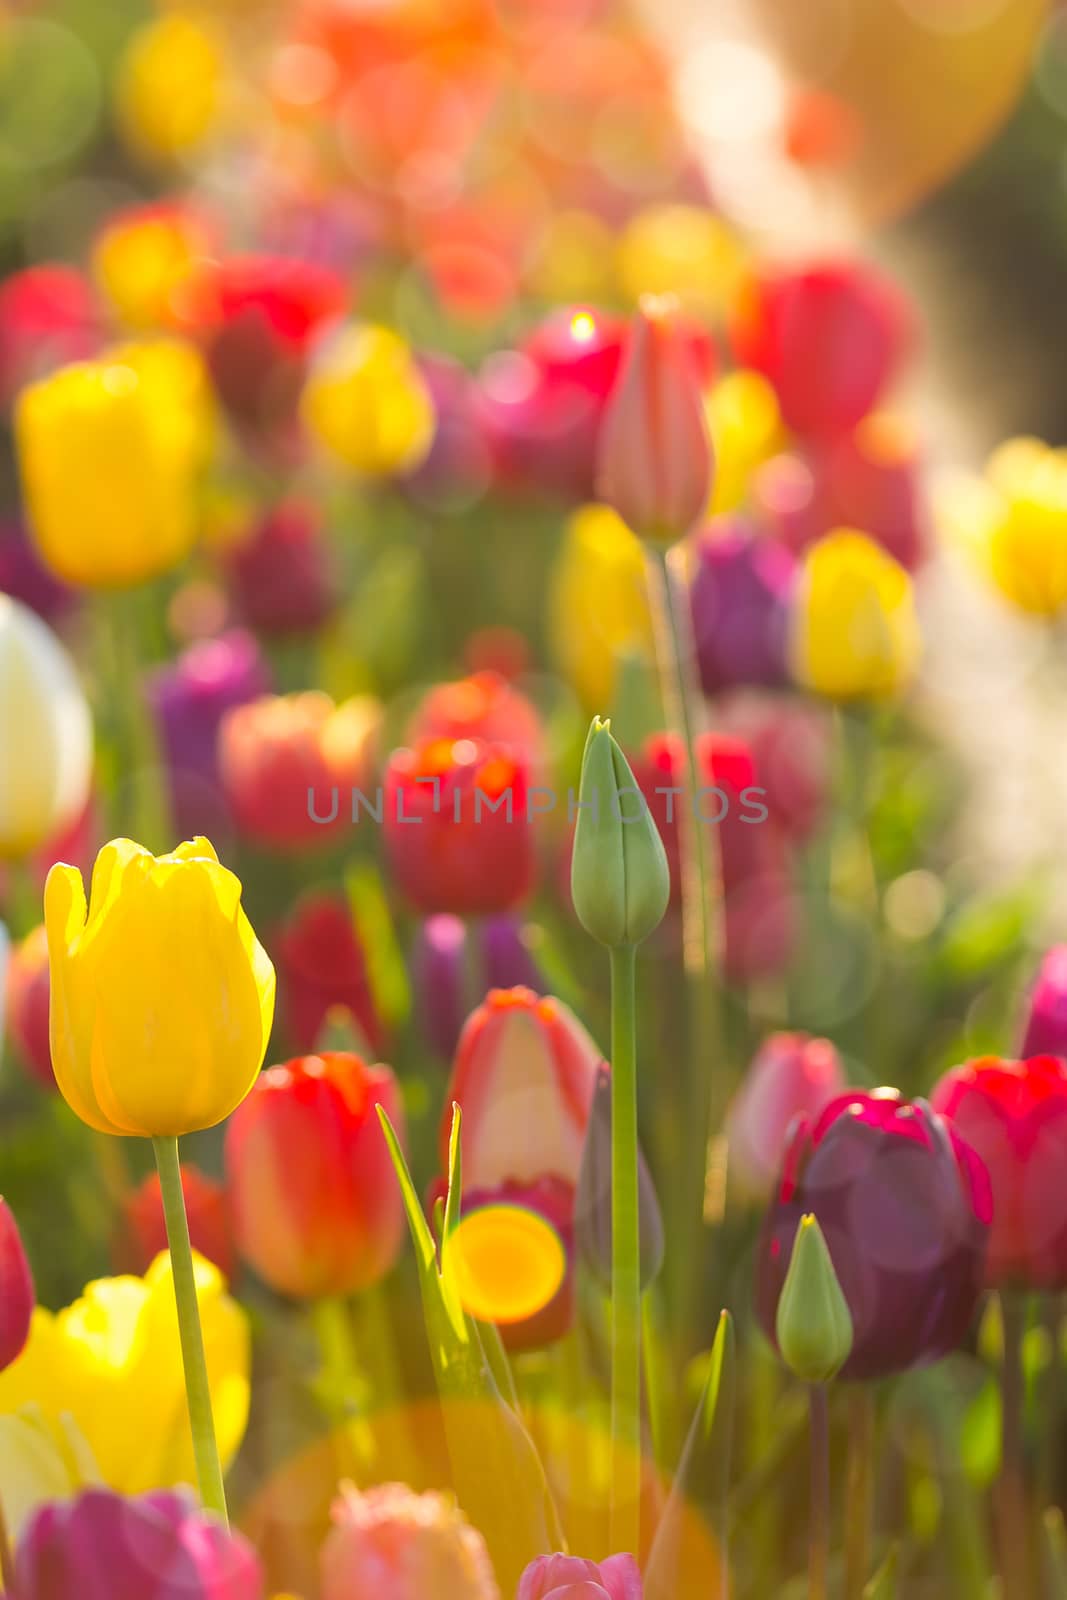 Sunlight on Fields of Tulips Flowers by Davidgn